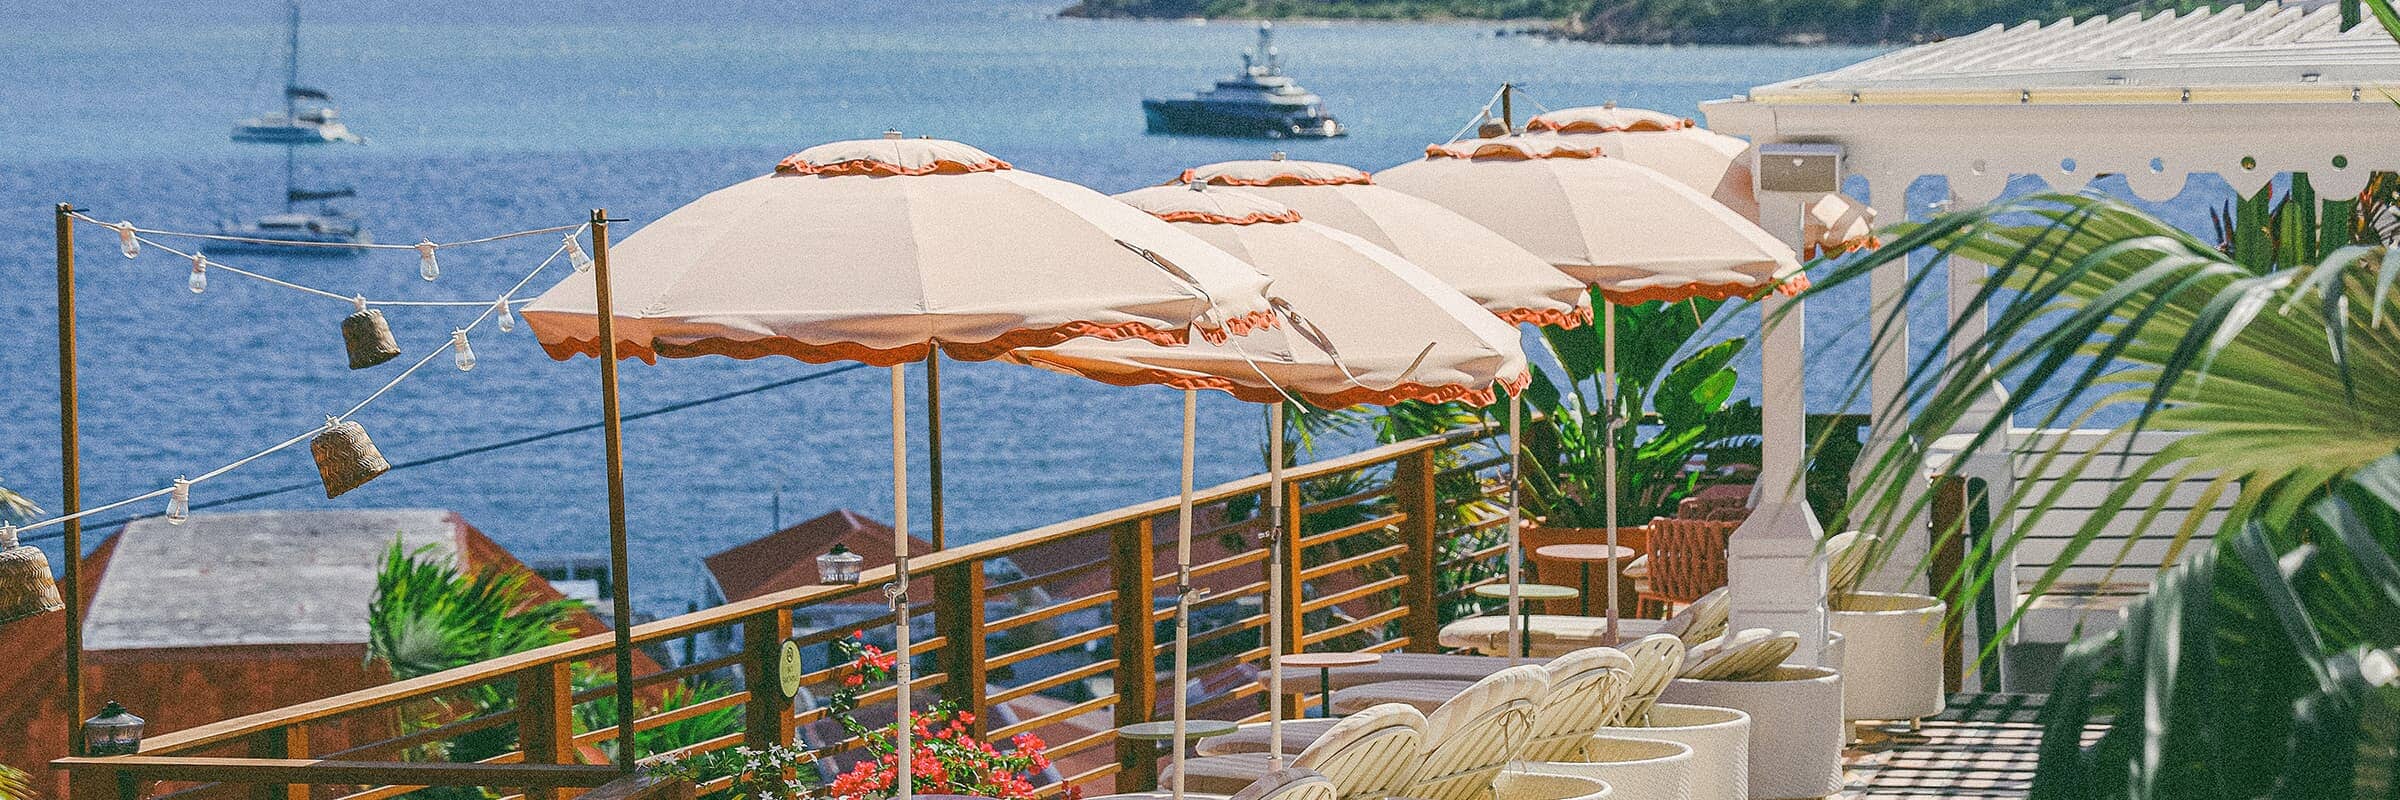 Pink Club Umbrellas in a resort setting overlooking the ocean